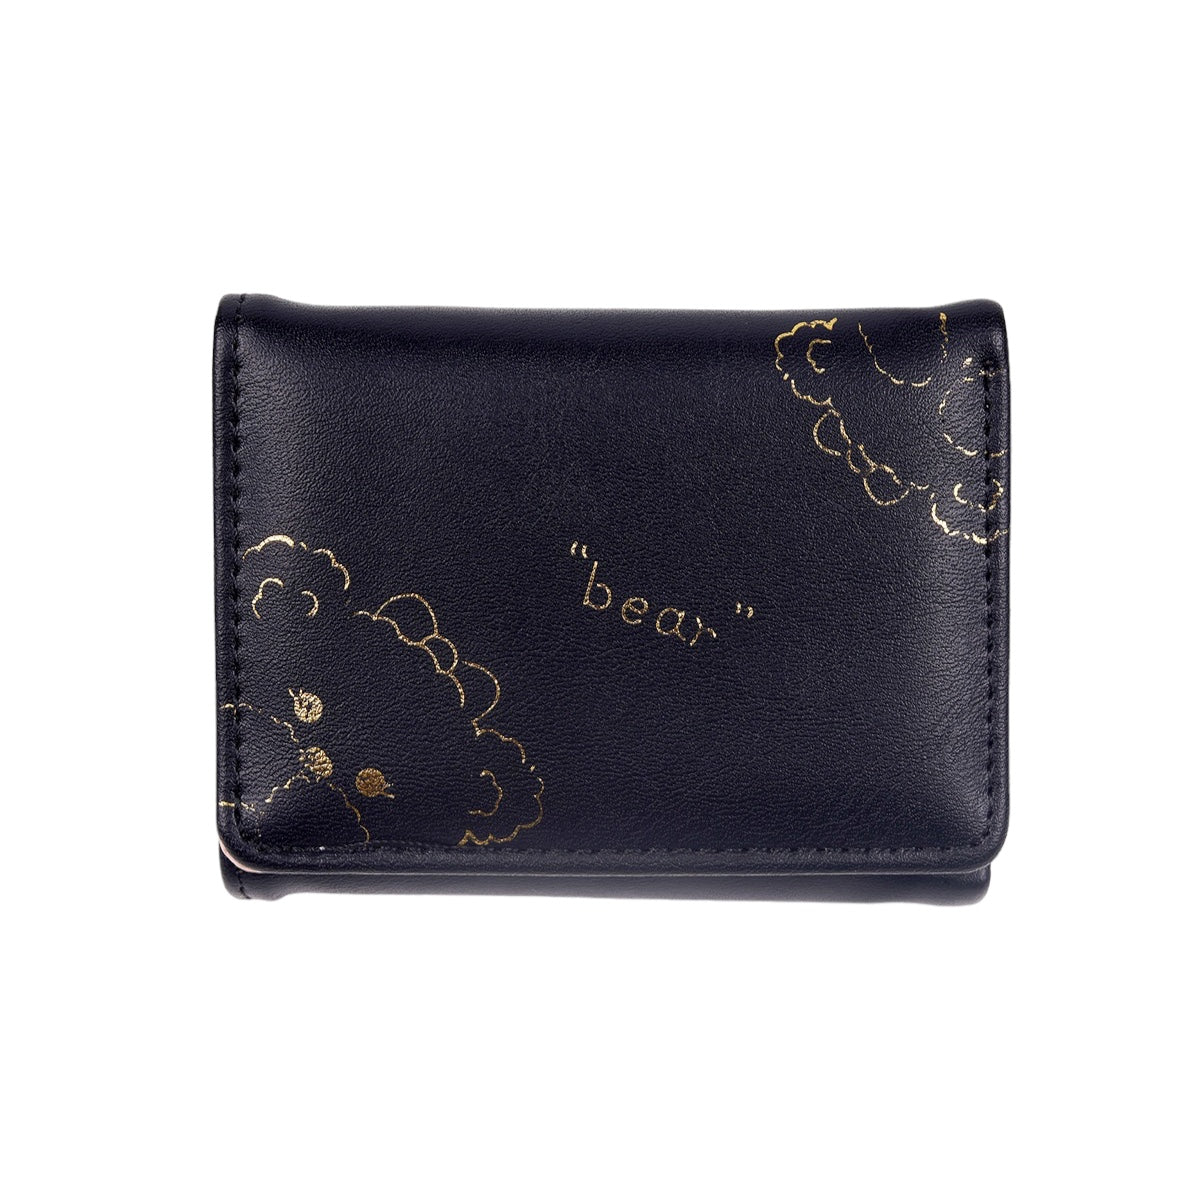 Bear Print Cute Wallet, Black